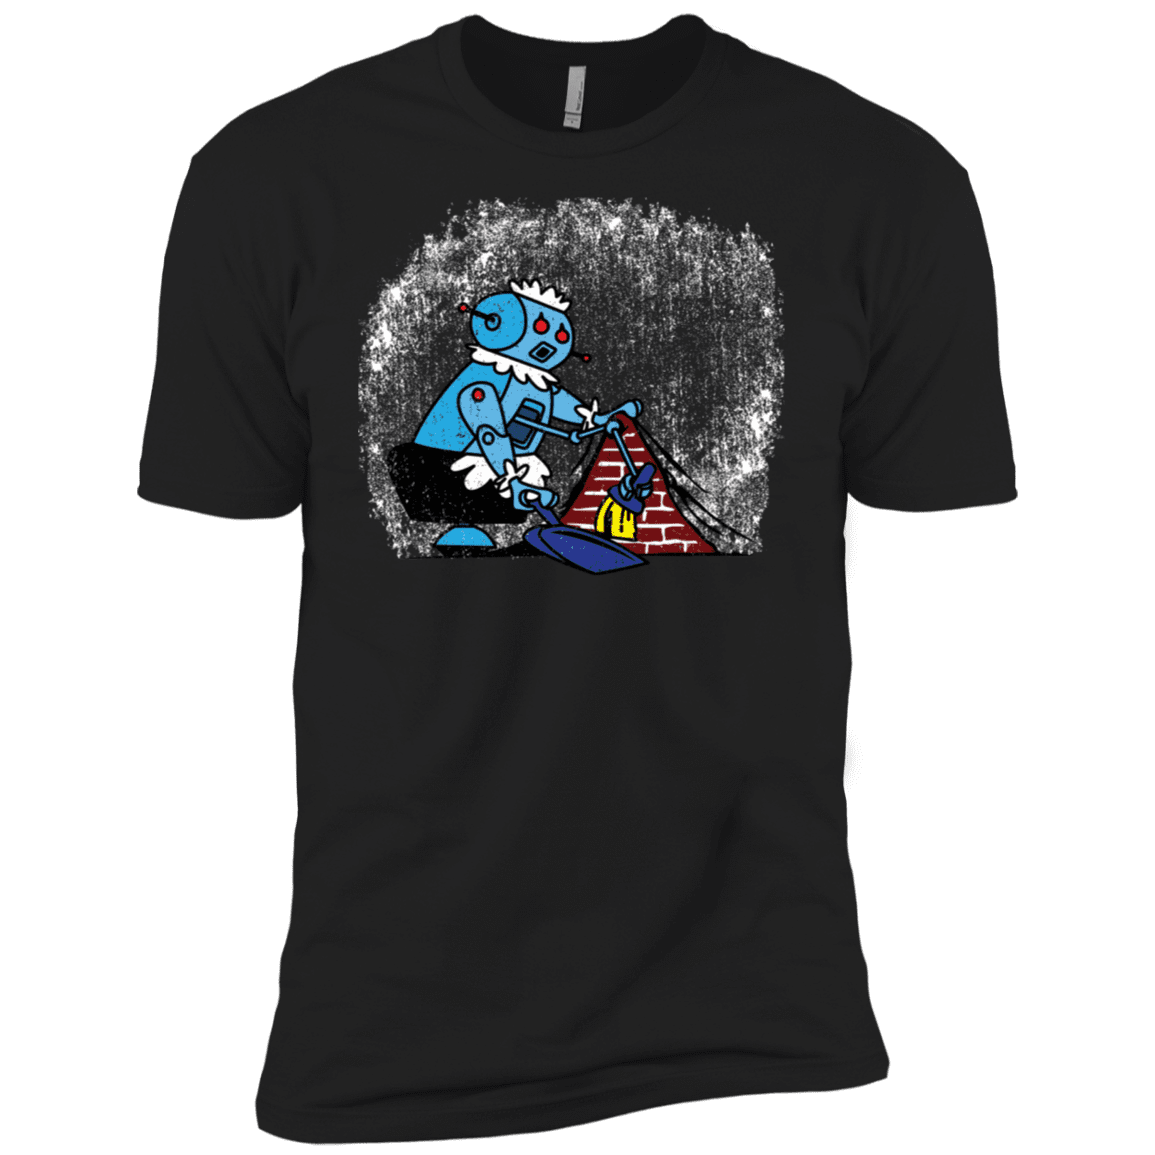 T-Shirts Black / X-Small Robot Cleaner Men's Premium T-Shirt